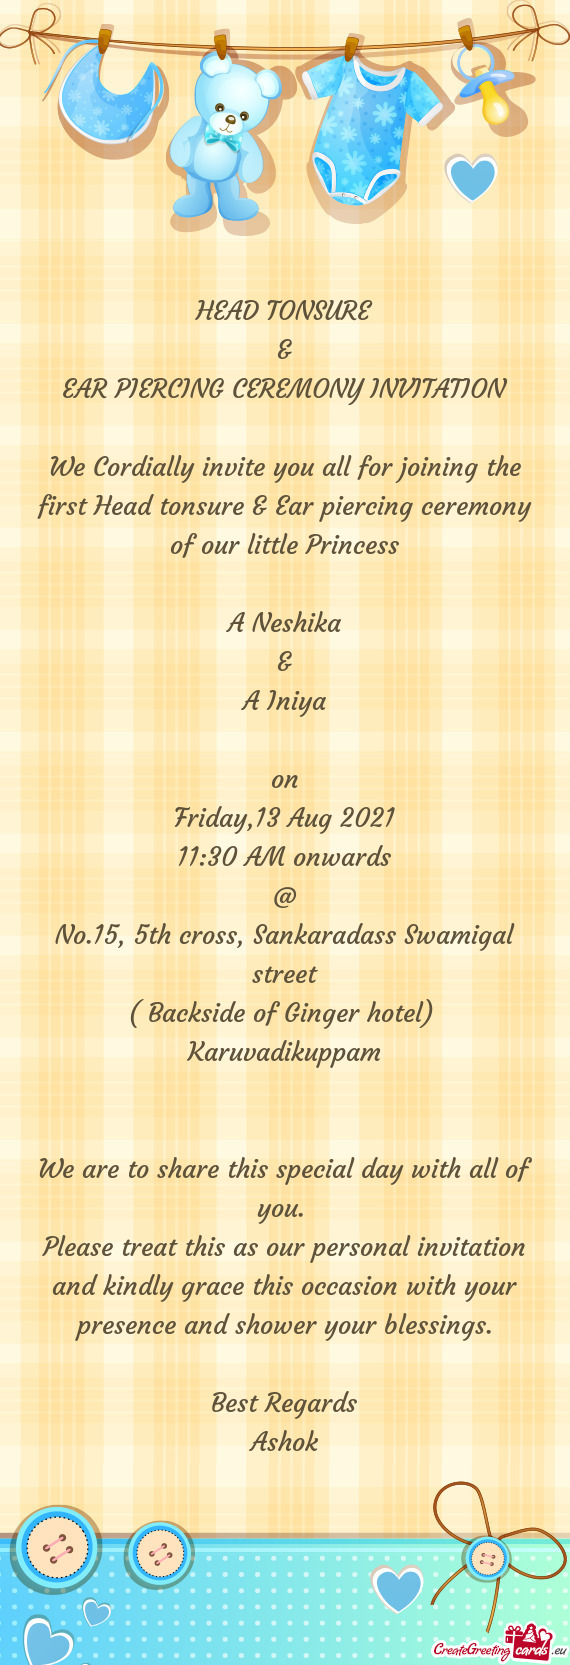 No.15, 5th cross, Sankaradass Swamigal street